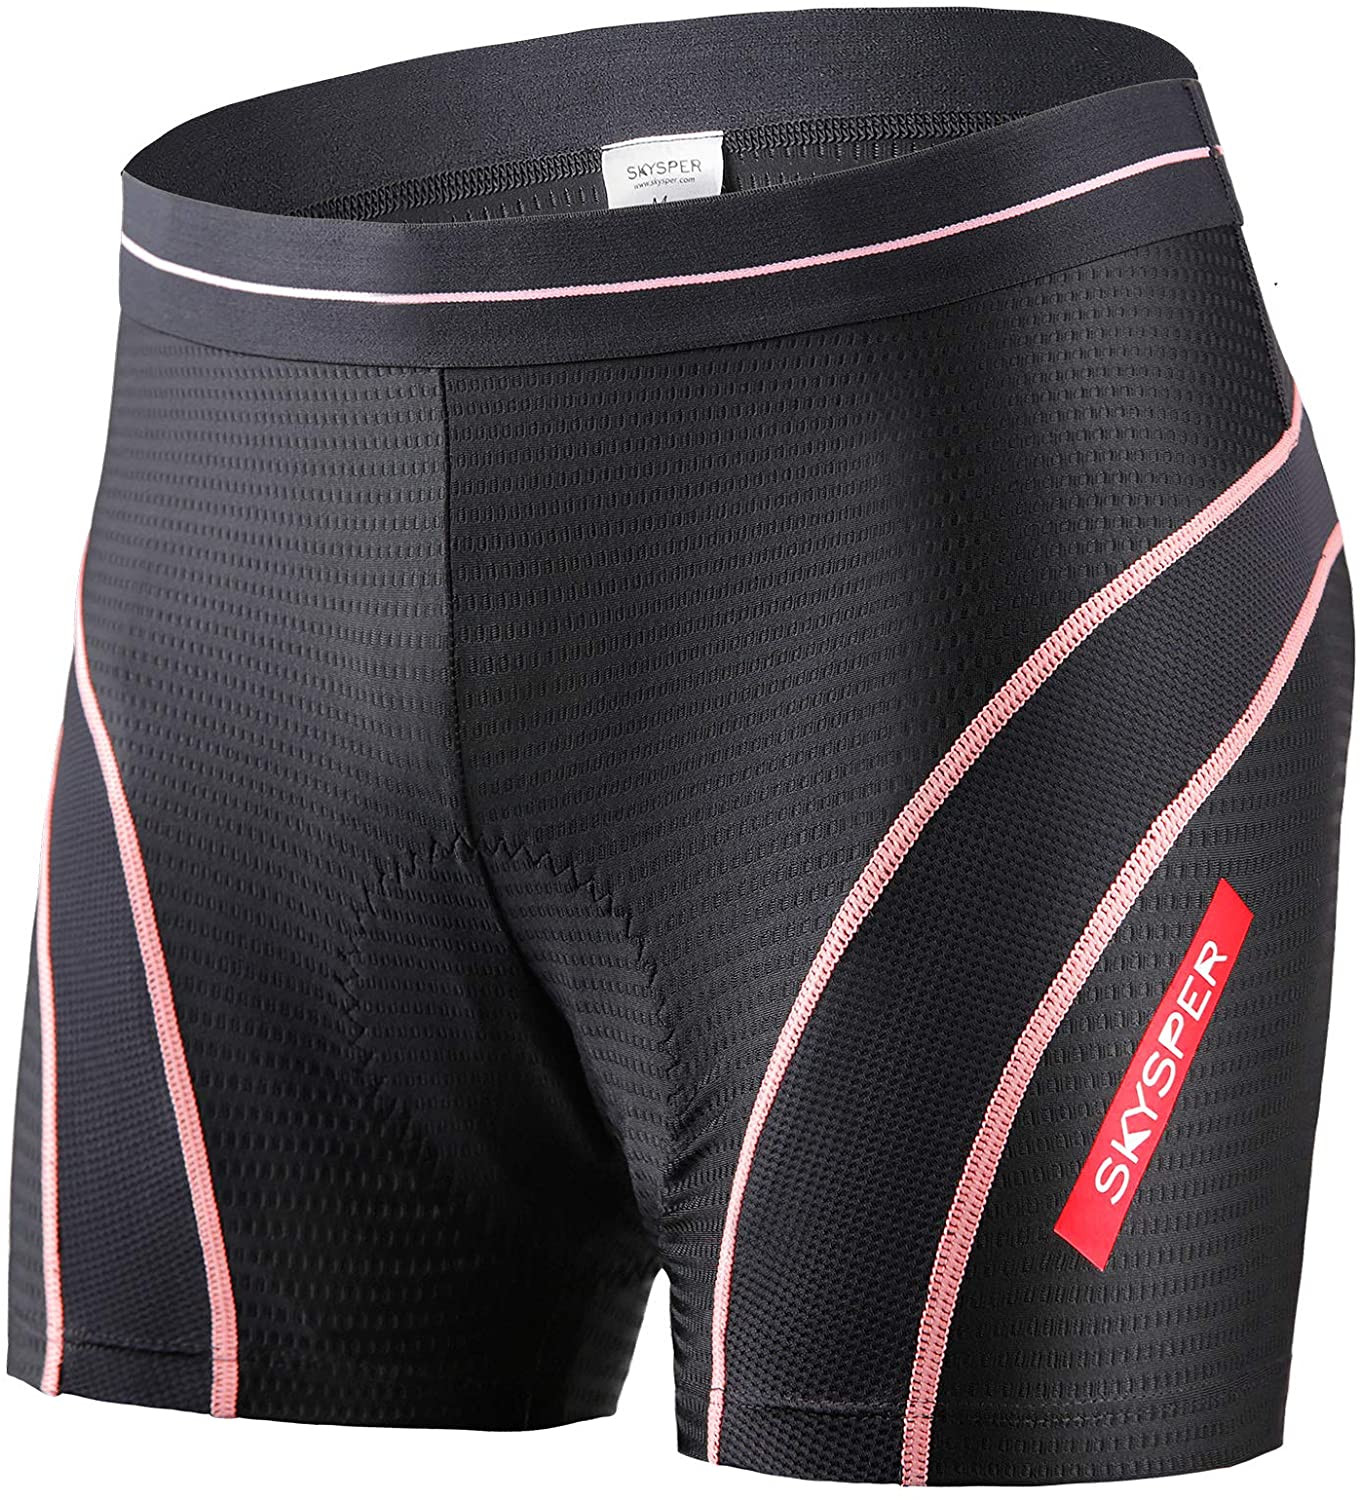 emprender Oblongo Shetland Skysper Pantalon Calzoncillos Ropa Interior Ciclismo para Mujer, XL, Negro